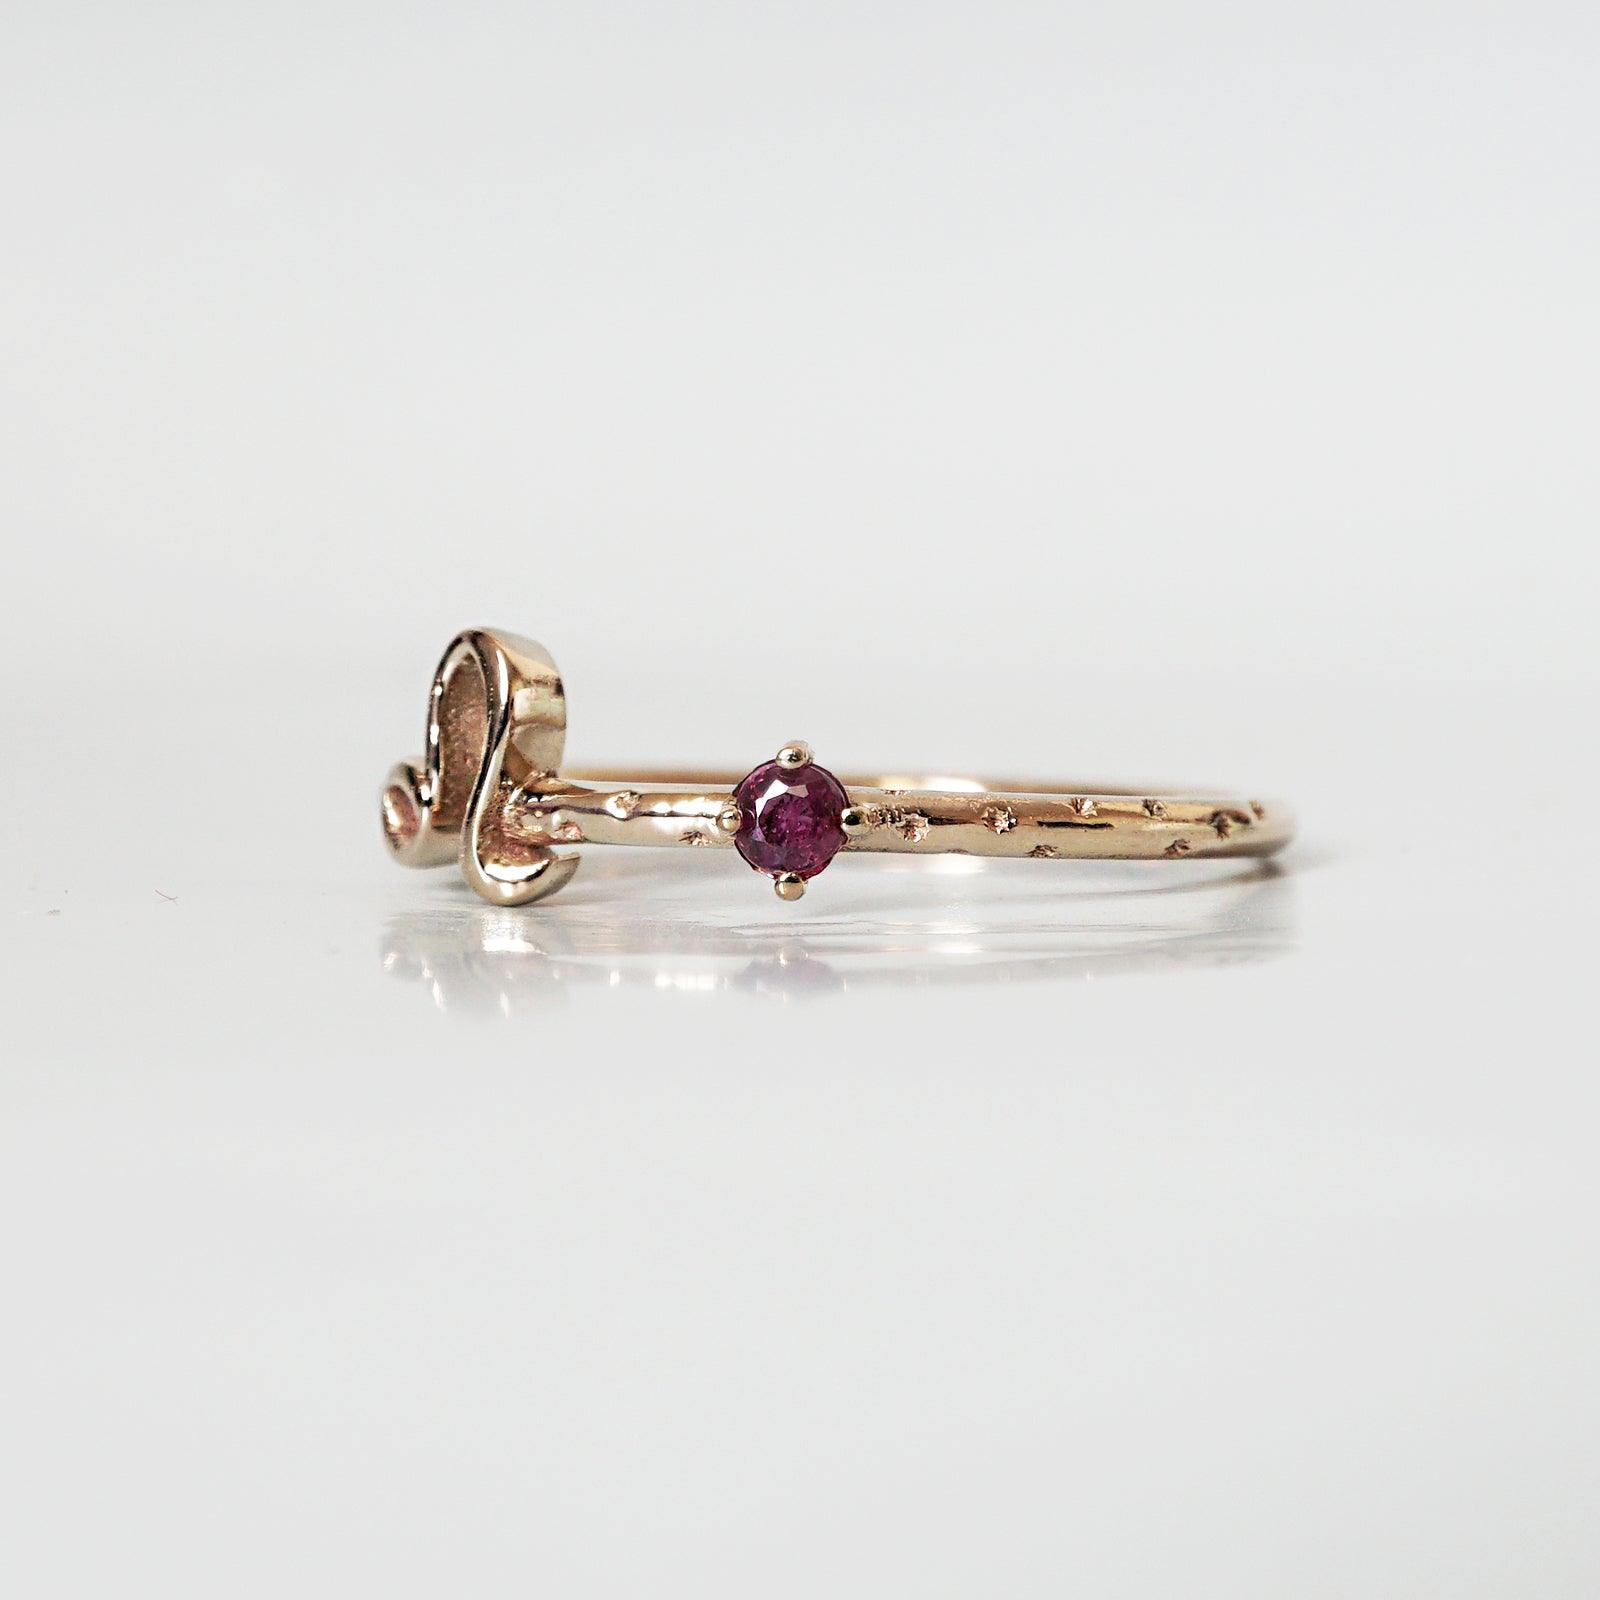 Womens Ruby July Birthstone Ring/Size 7 -- GREAT GIFT IDEA | eBay